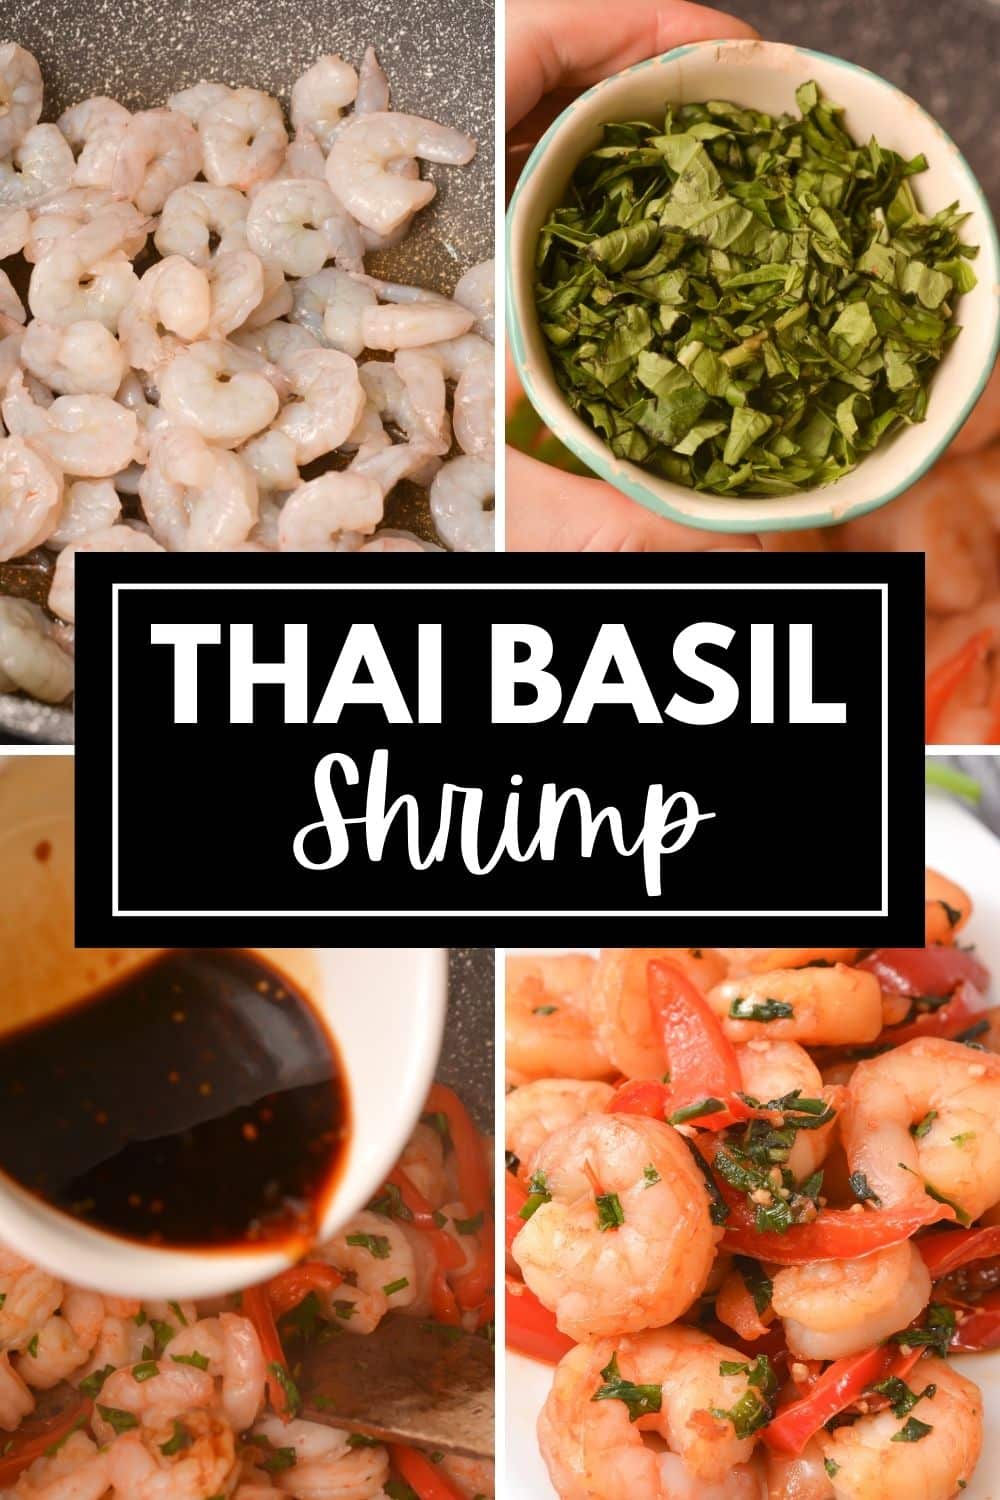 Various stages of Thai basil shrimp preparation.